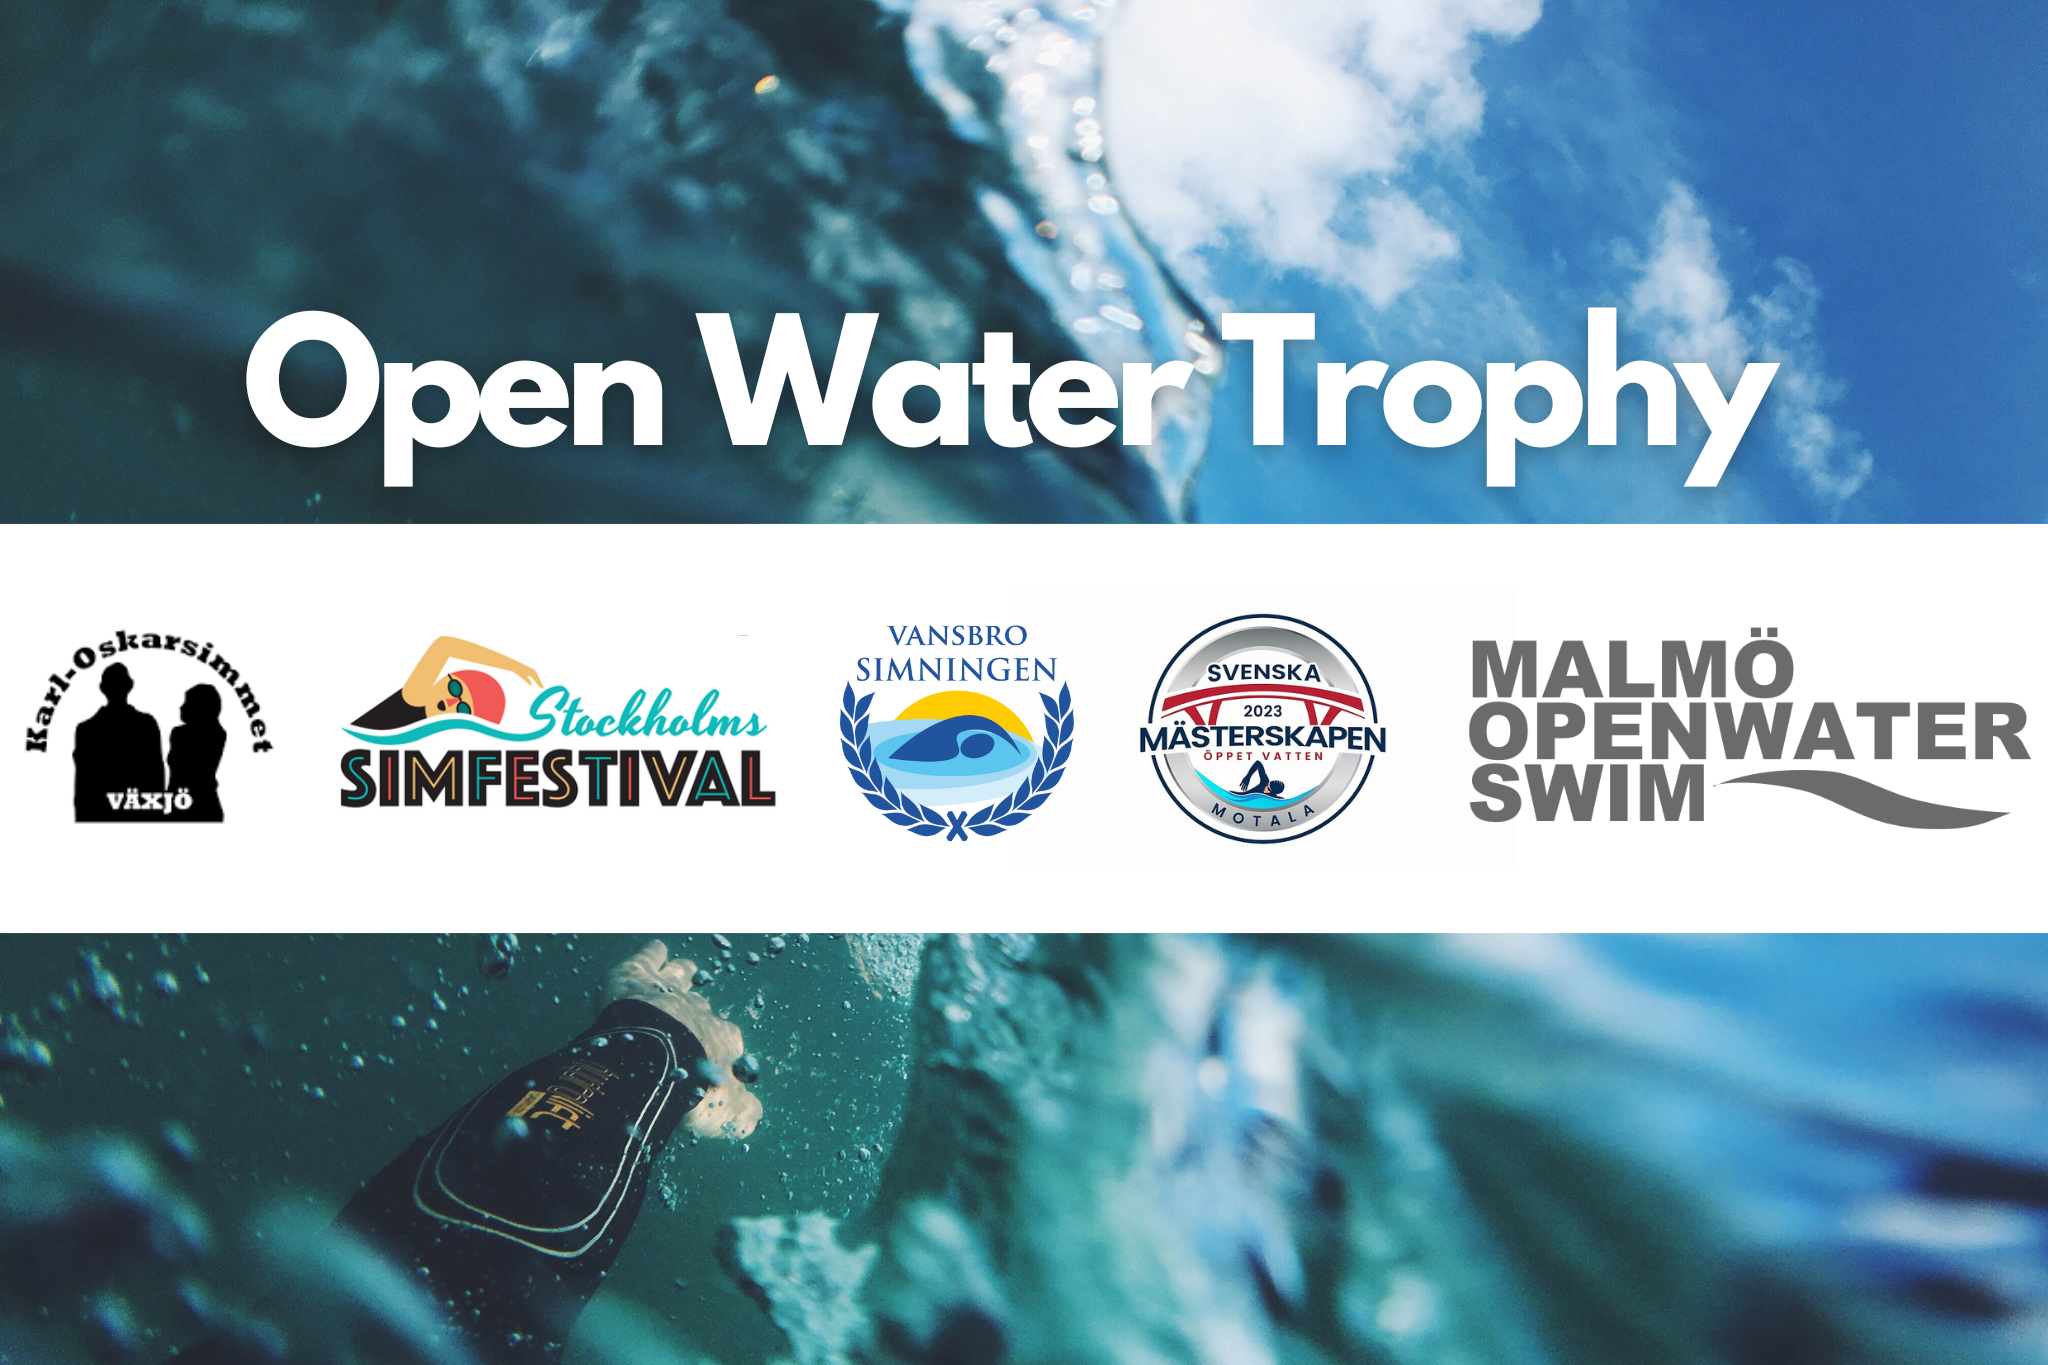 Open Water Trophy 2023